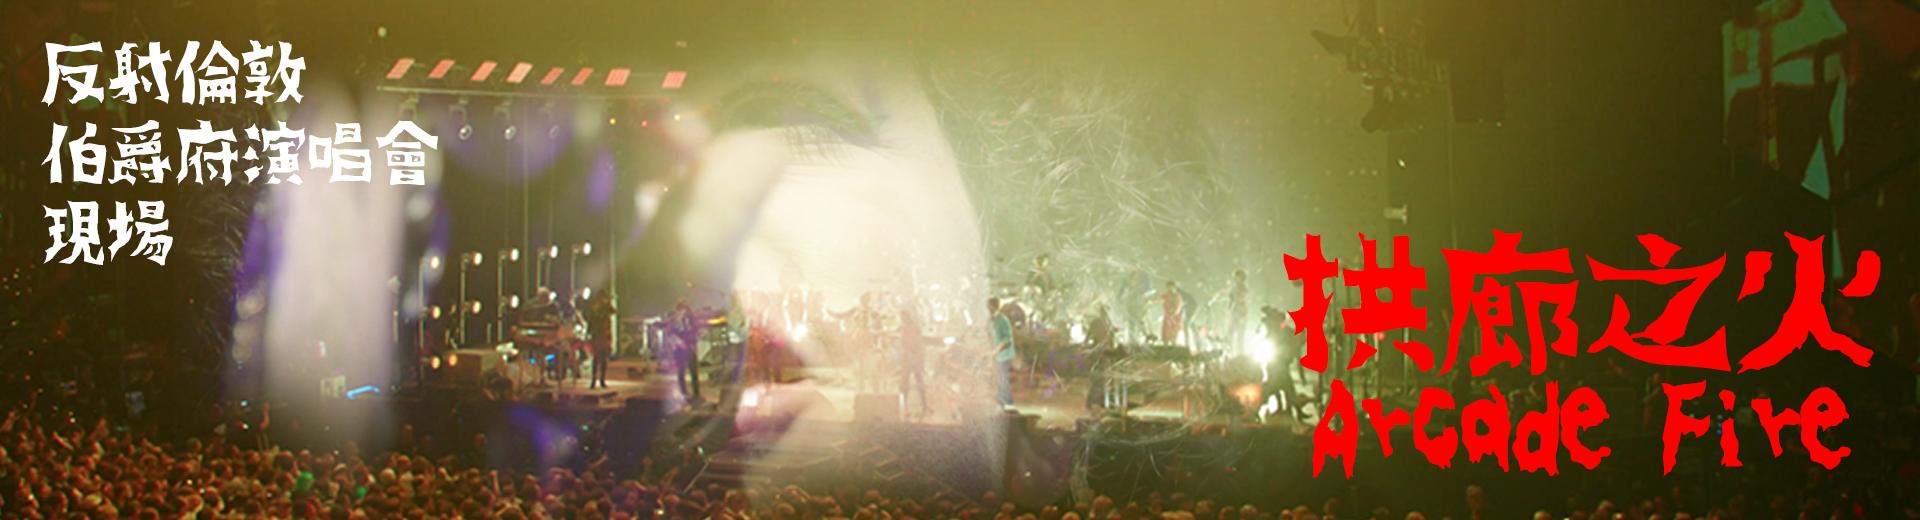 拱廊之火樂團—倫敦伯爵府演唱會現場 Arcade Fire - Live at Earl’s Court: The Reflektor Tapes